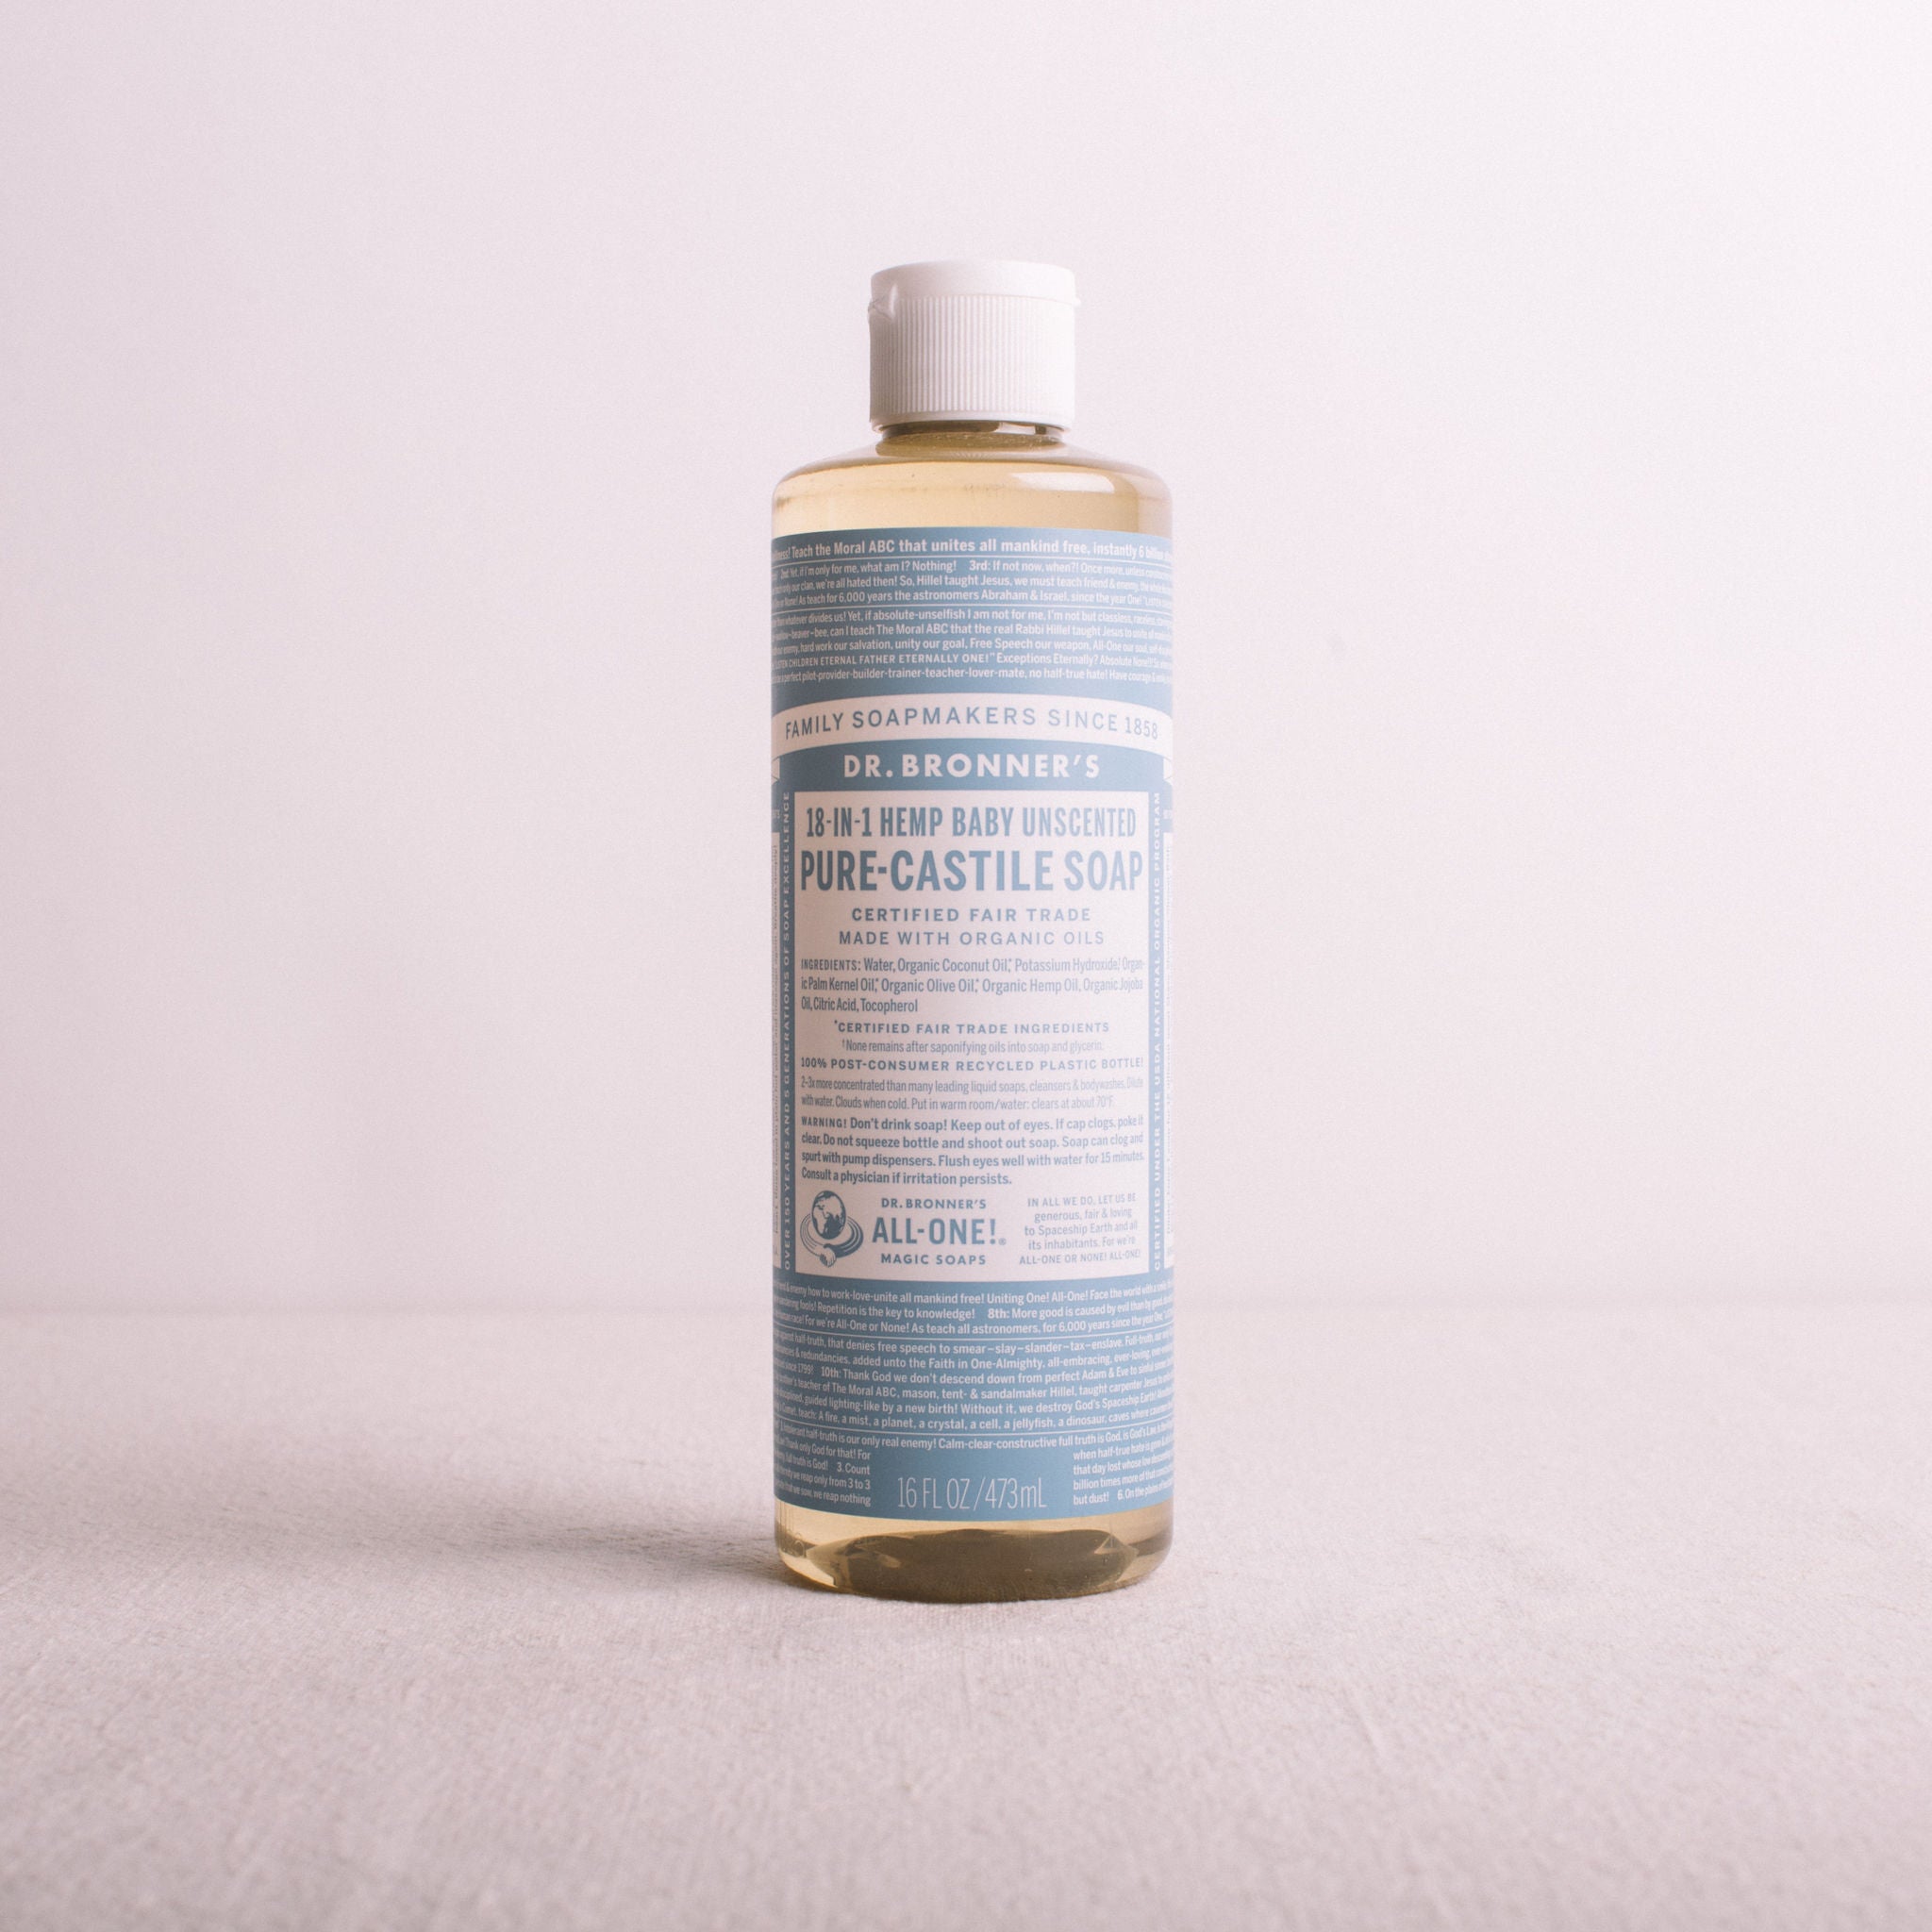 PURE-CASTILE LIQUID SOAP || DR BRONNER'S